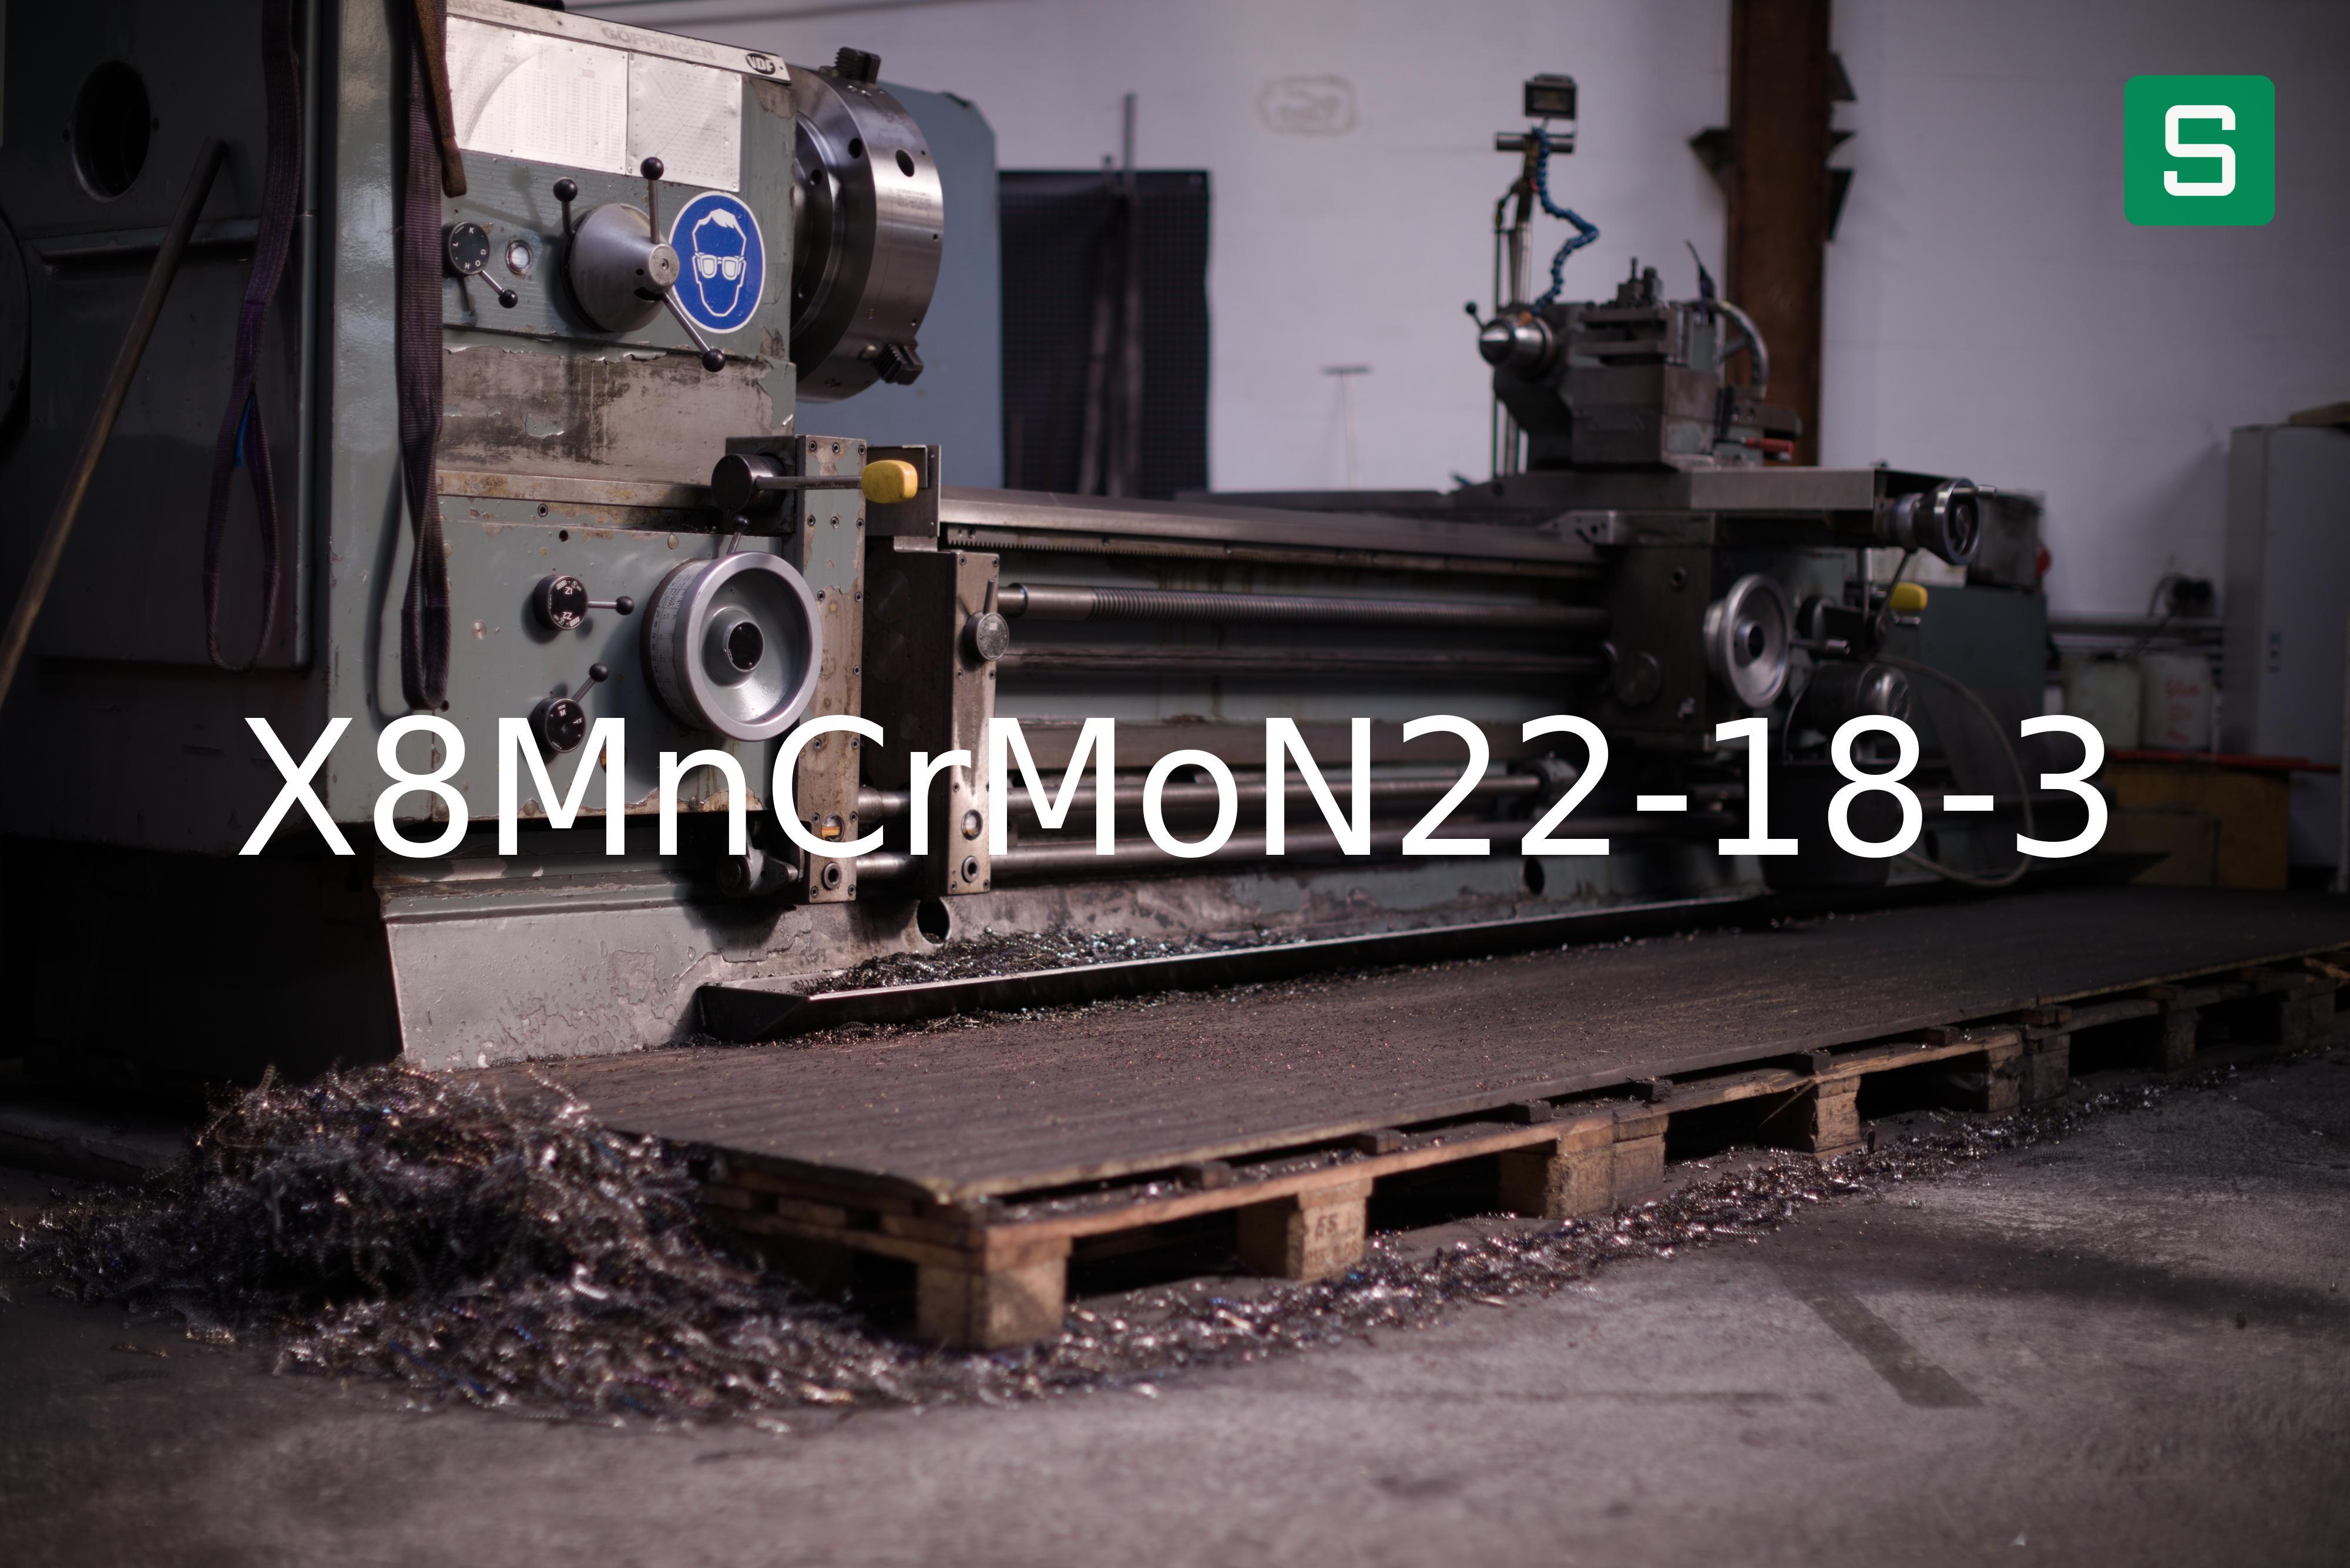 Steel Material: X8MnCrMoN22-18-3